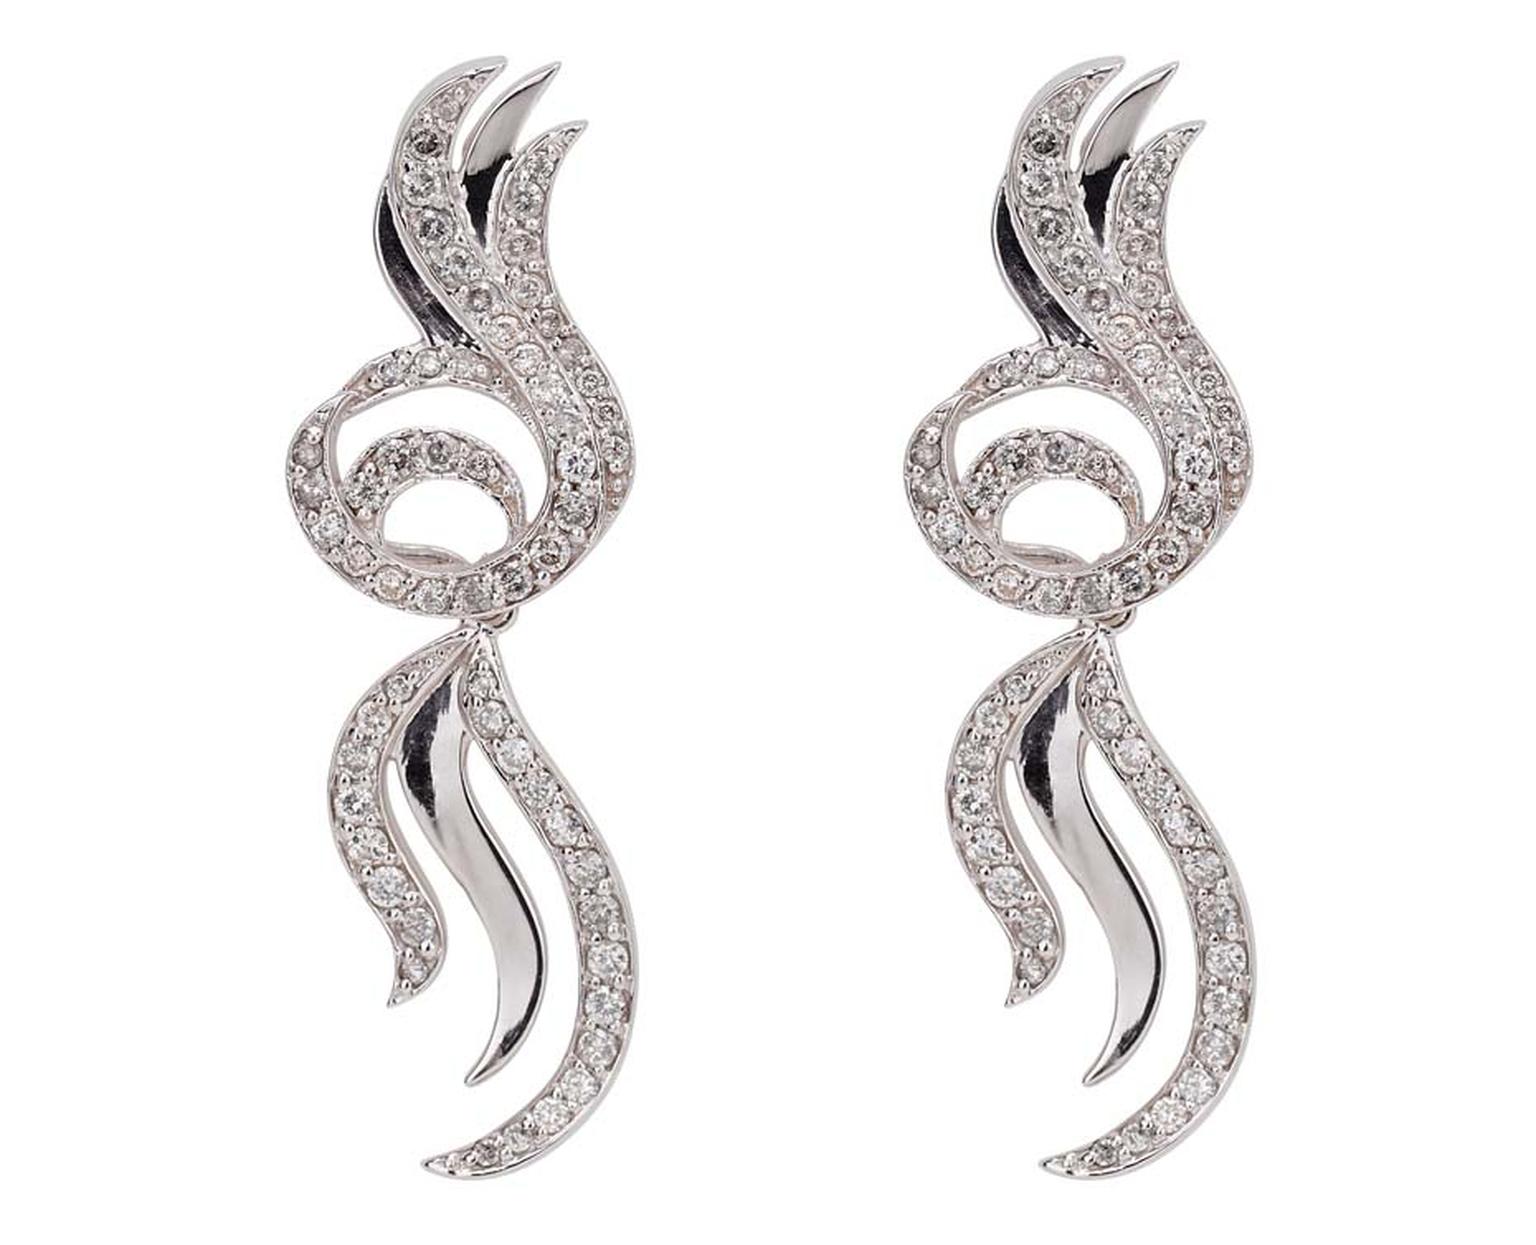 Deborah Pagani gold and grey diamond detachable earrings, available at Latest Revival.